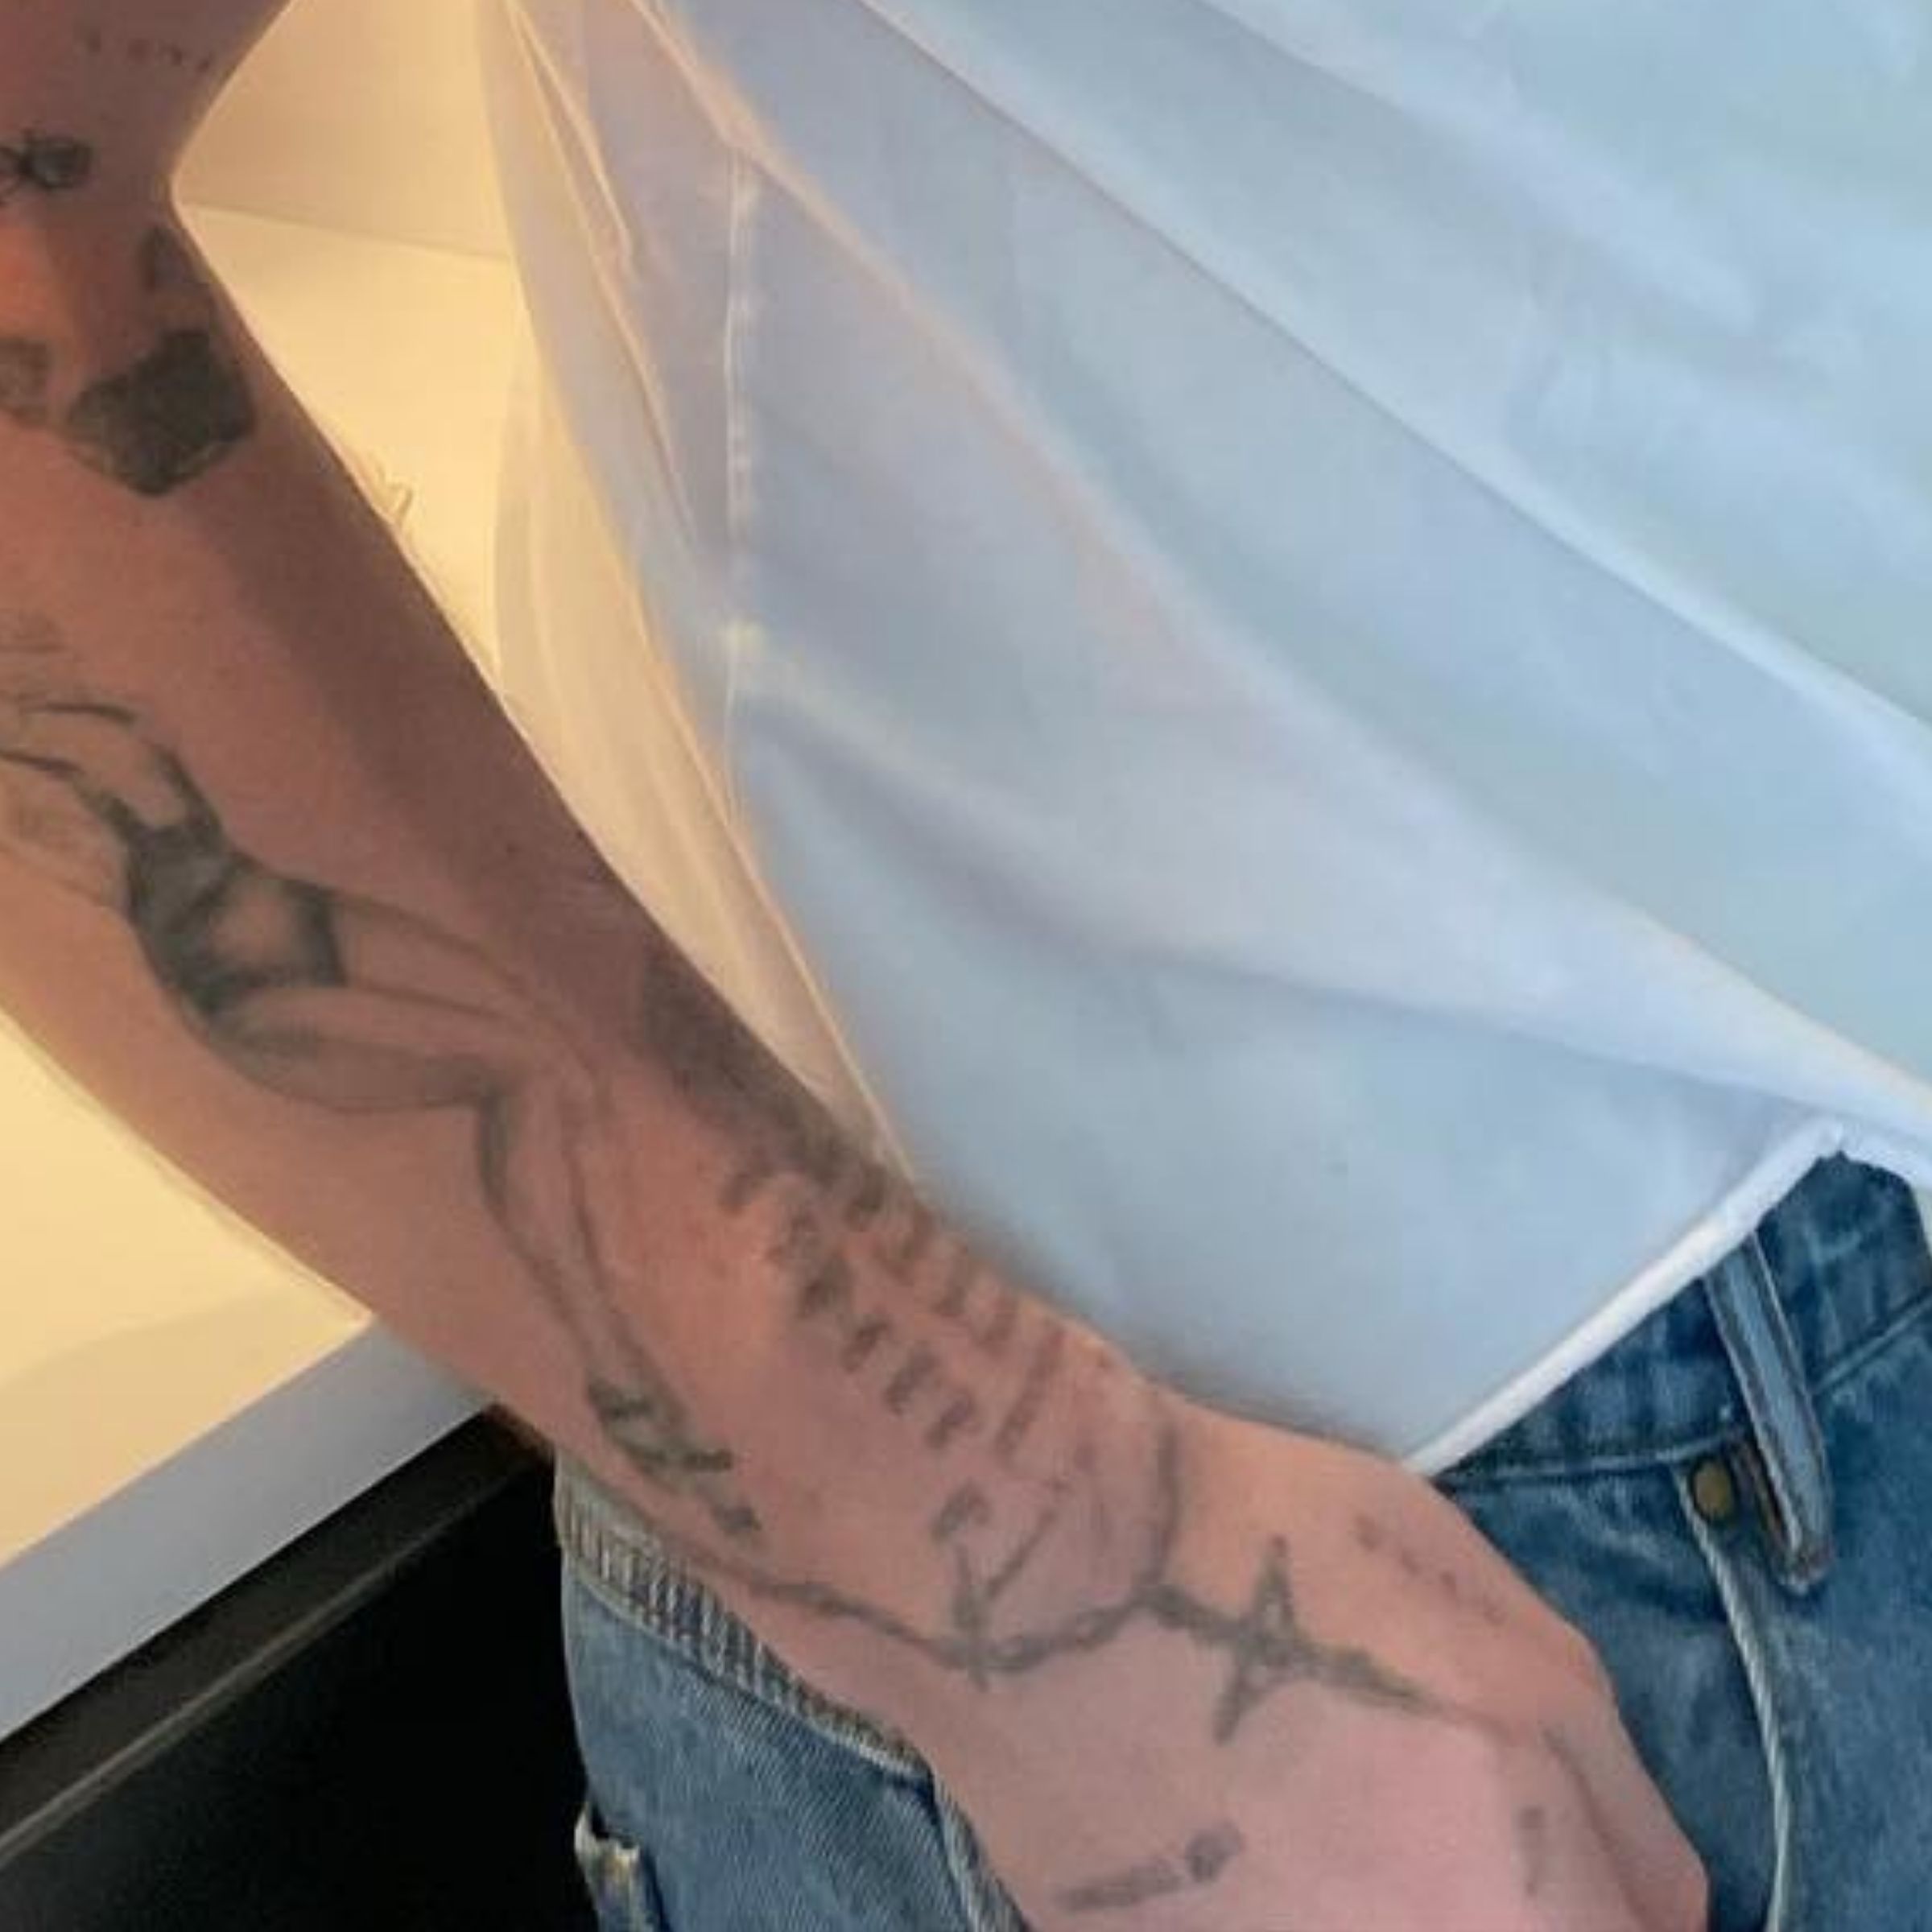 Brooklyn Beckham surprises Nicola Peltz with another tattoo